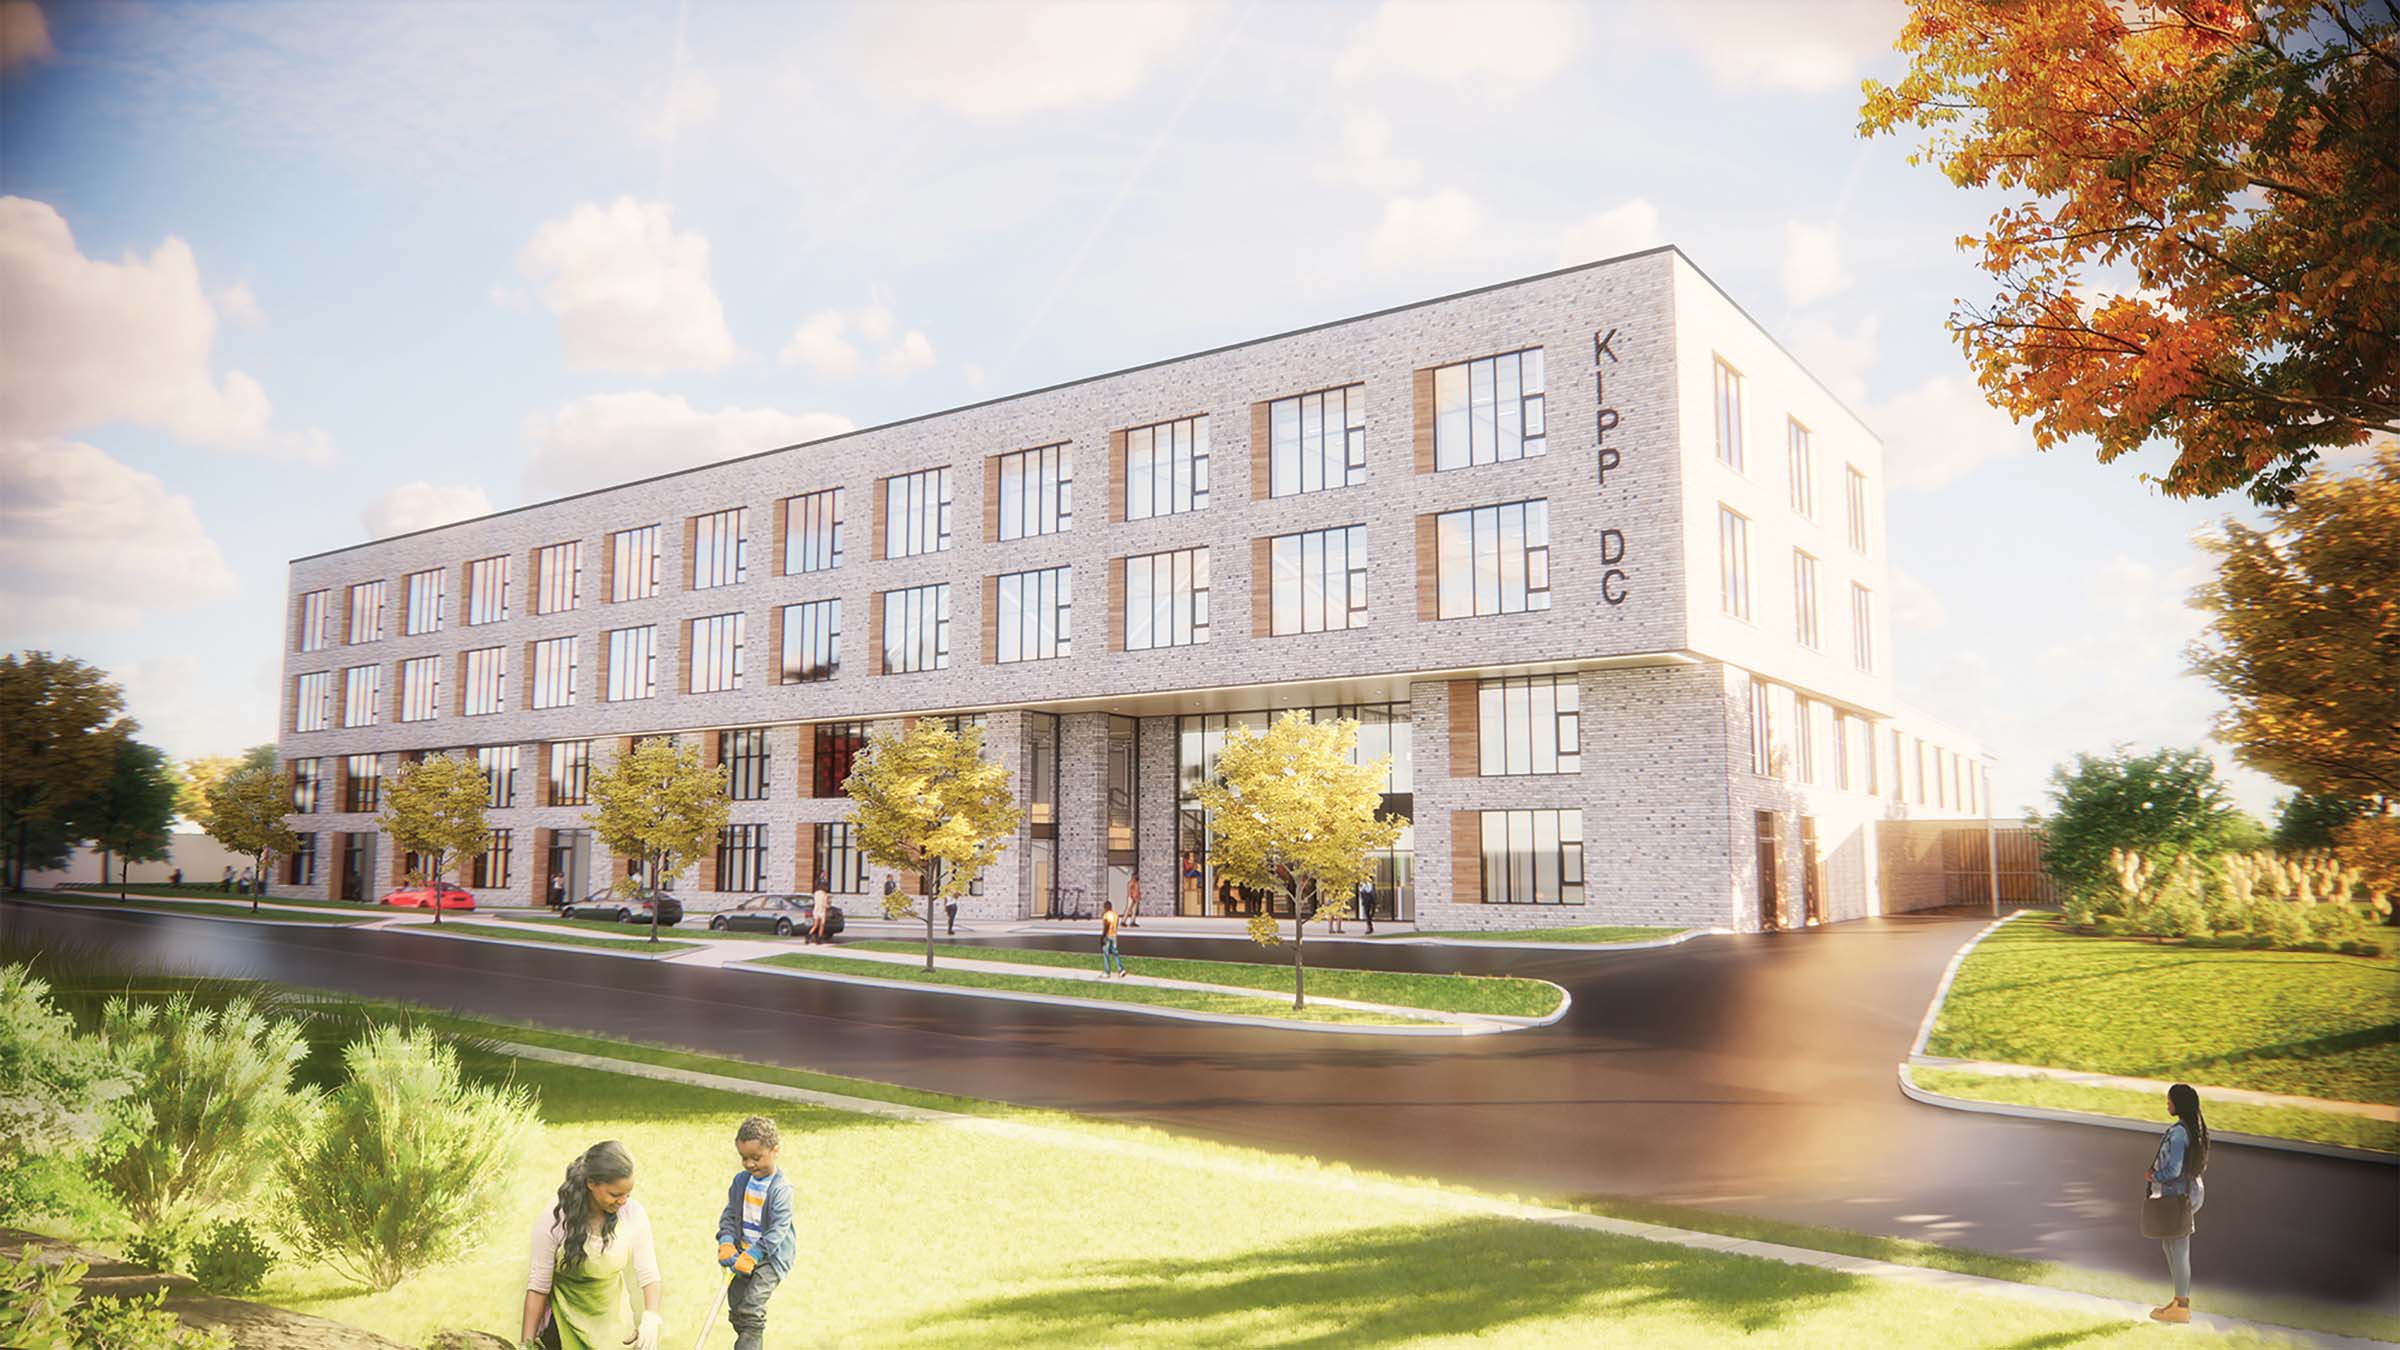 Rendering of the new KIPP DC high school